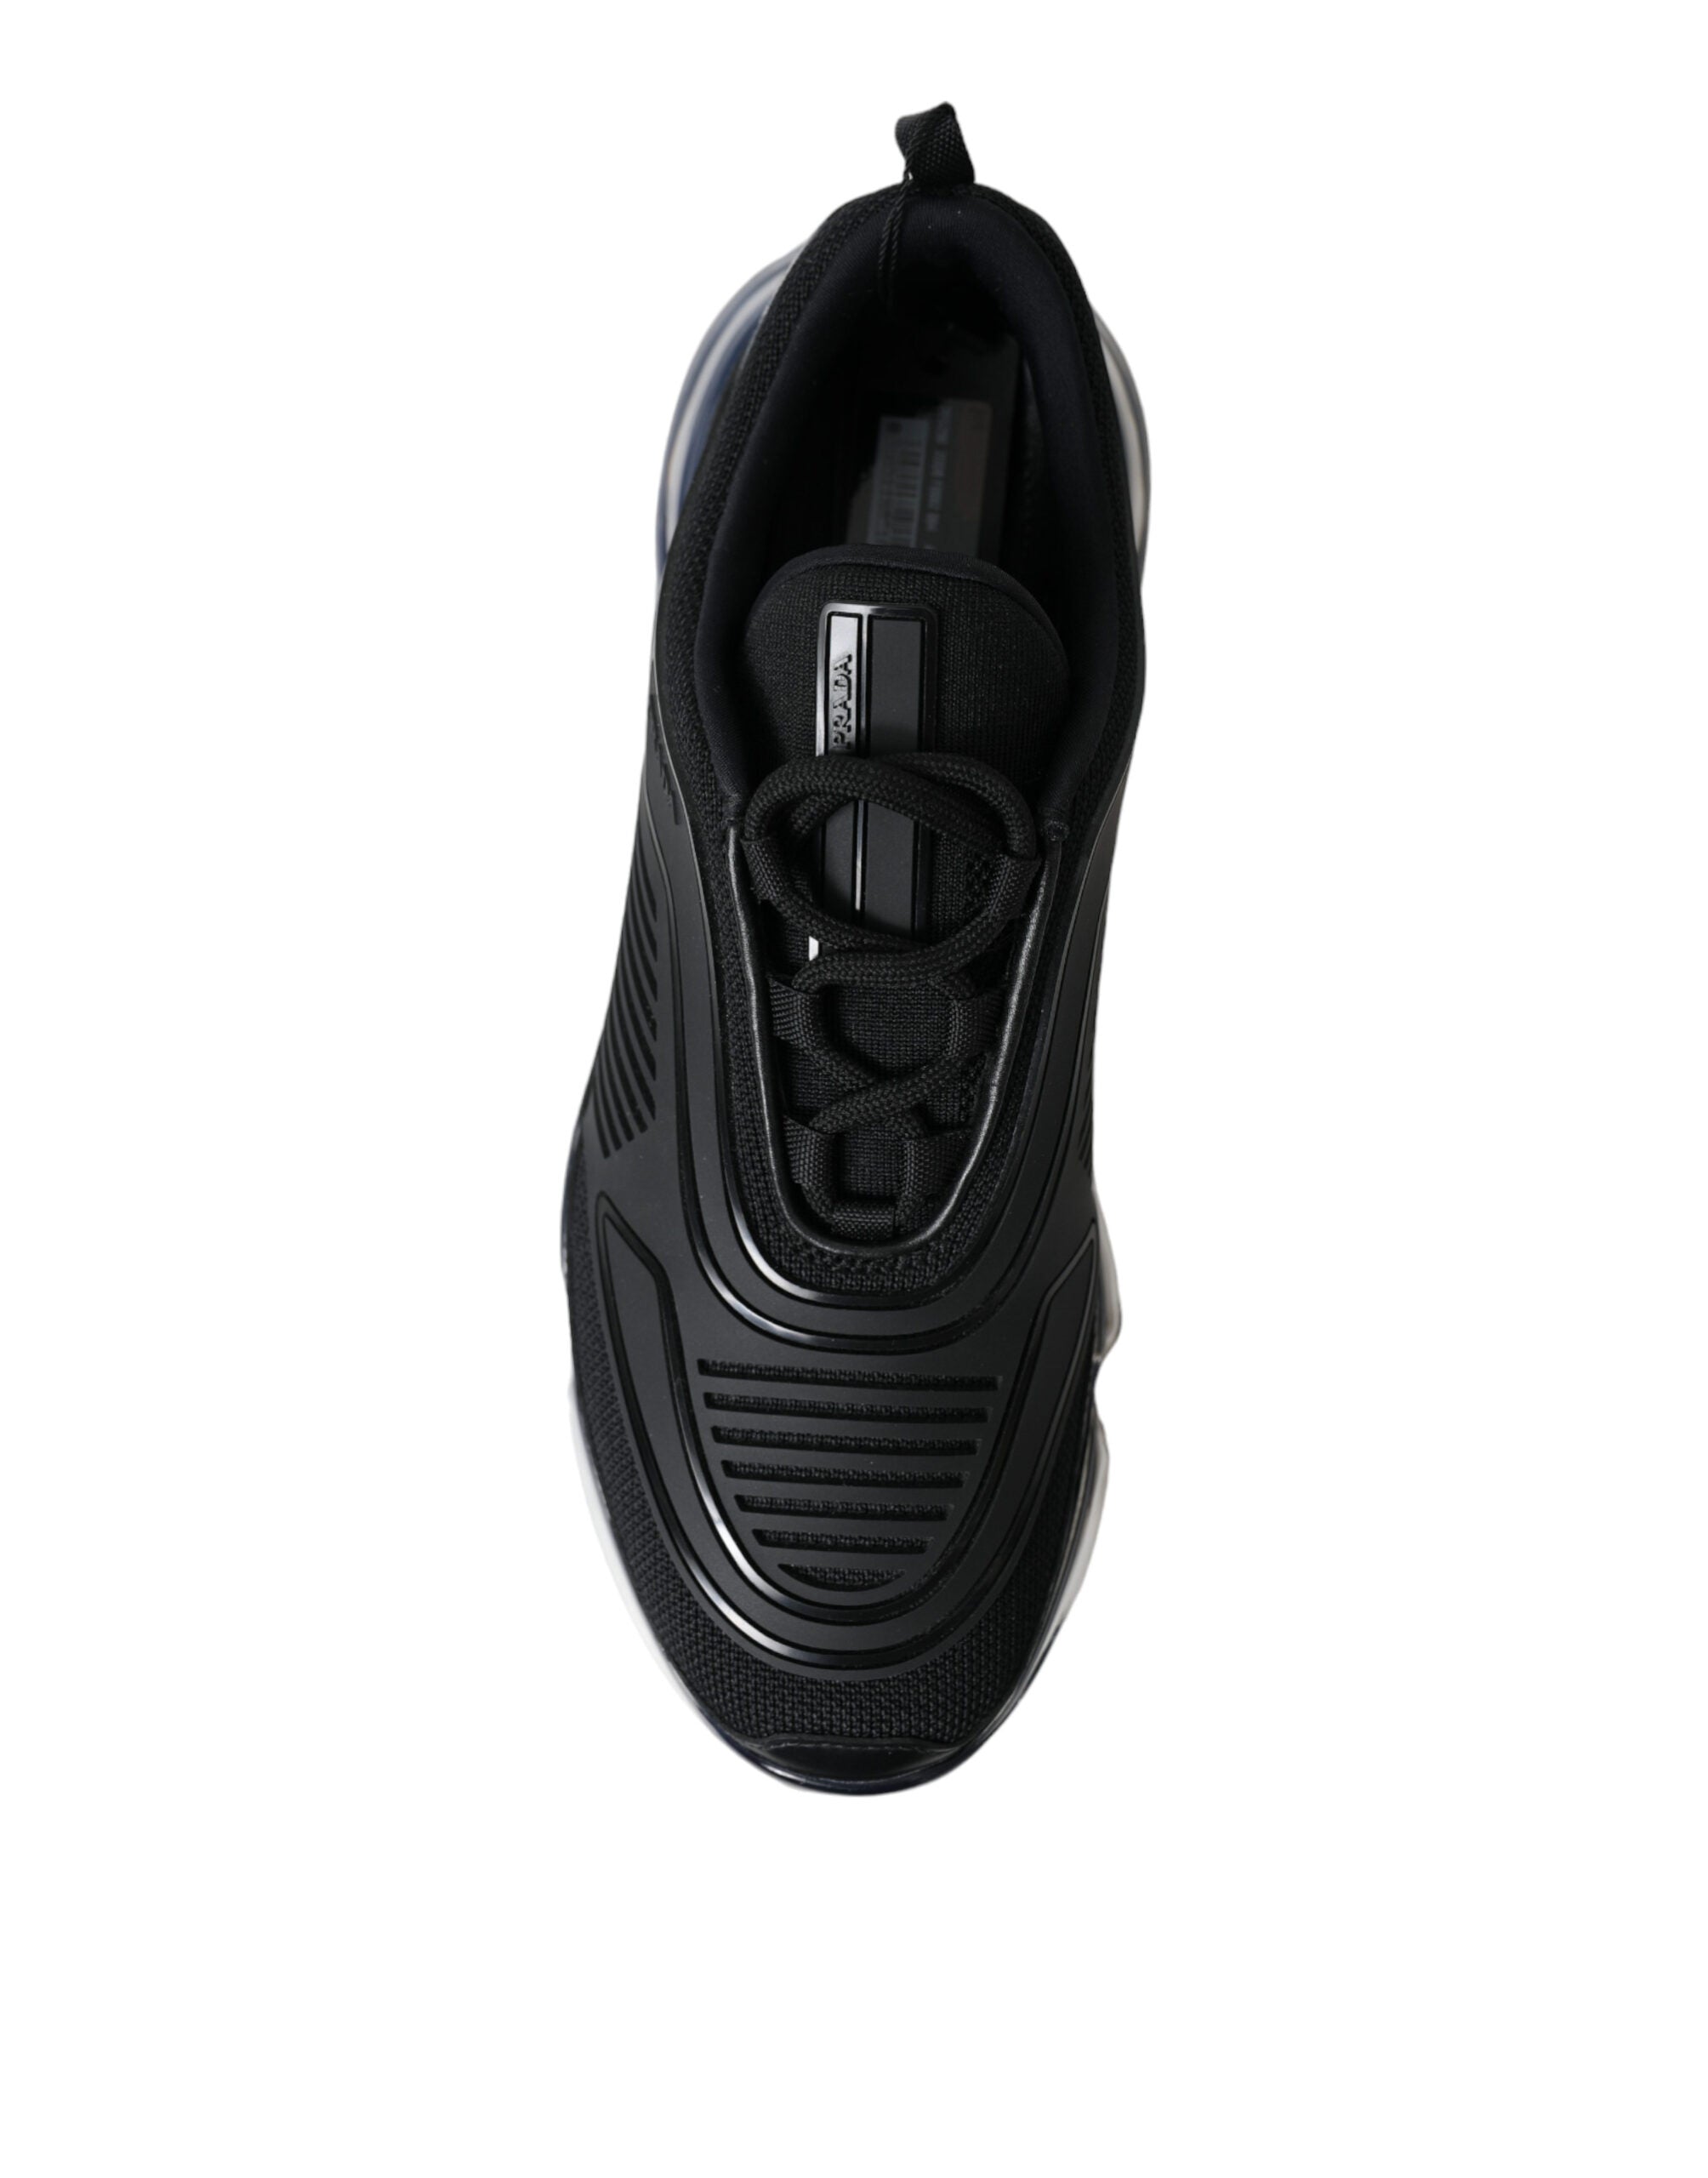 Prada Black Rubber Knit Slip On Low Top Sneakers Shoes